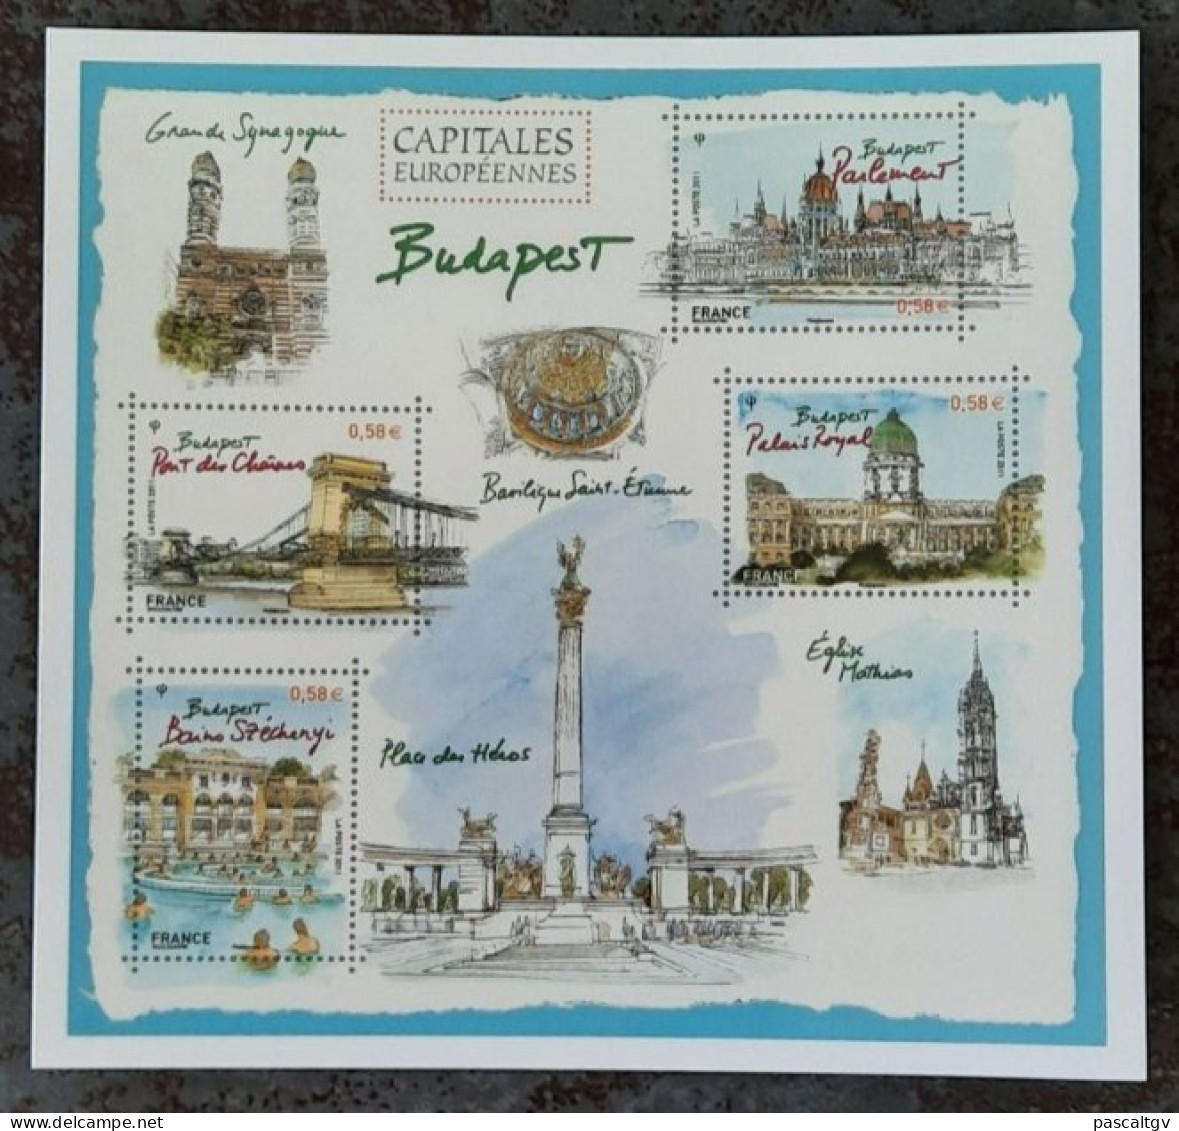 2011 - Entier Postal International - 20gr (1,96 Euro) - ** BUDAPEST Capitale Européenne ** - 4538 - LUXE - - Postdokumente